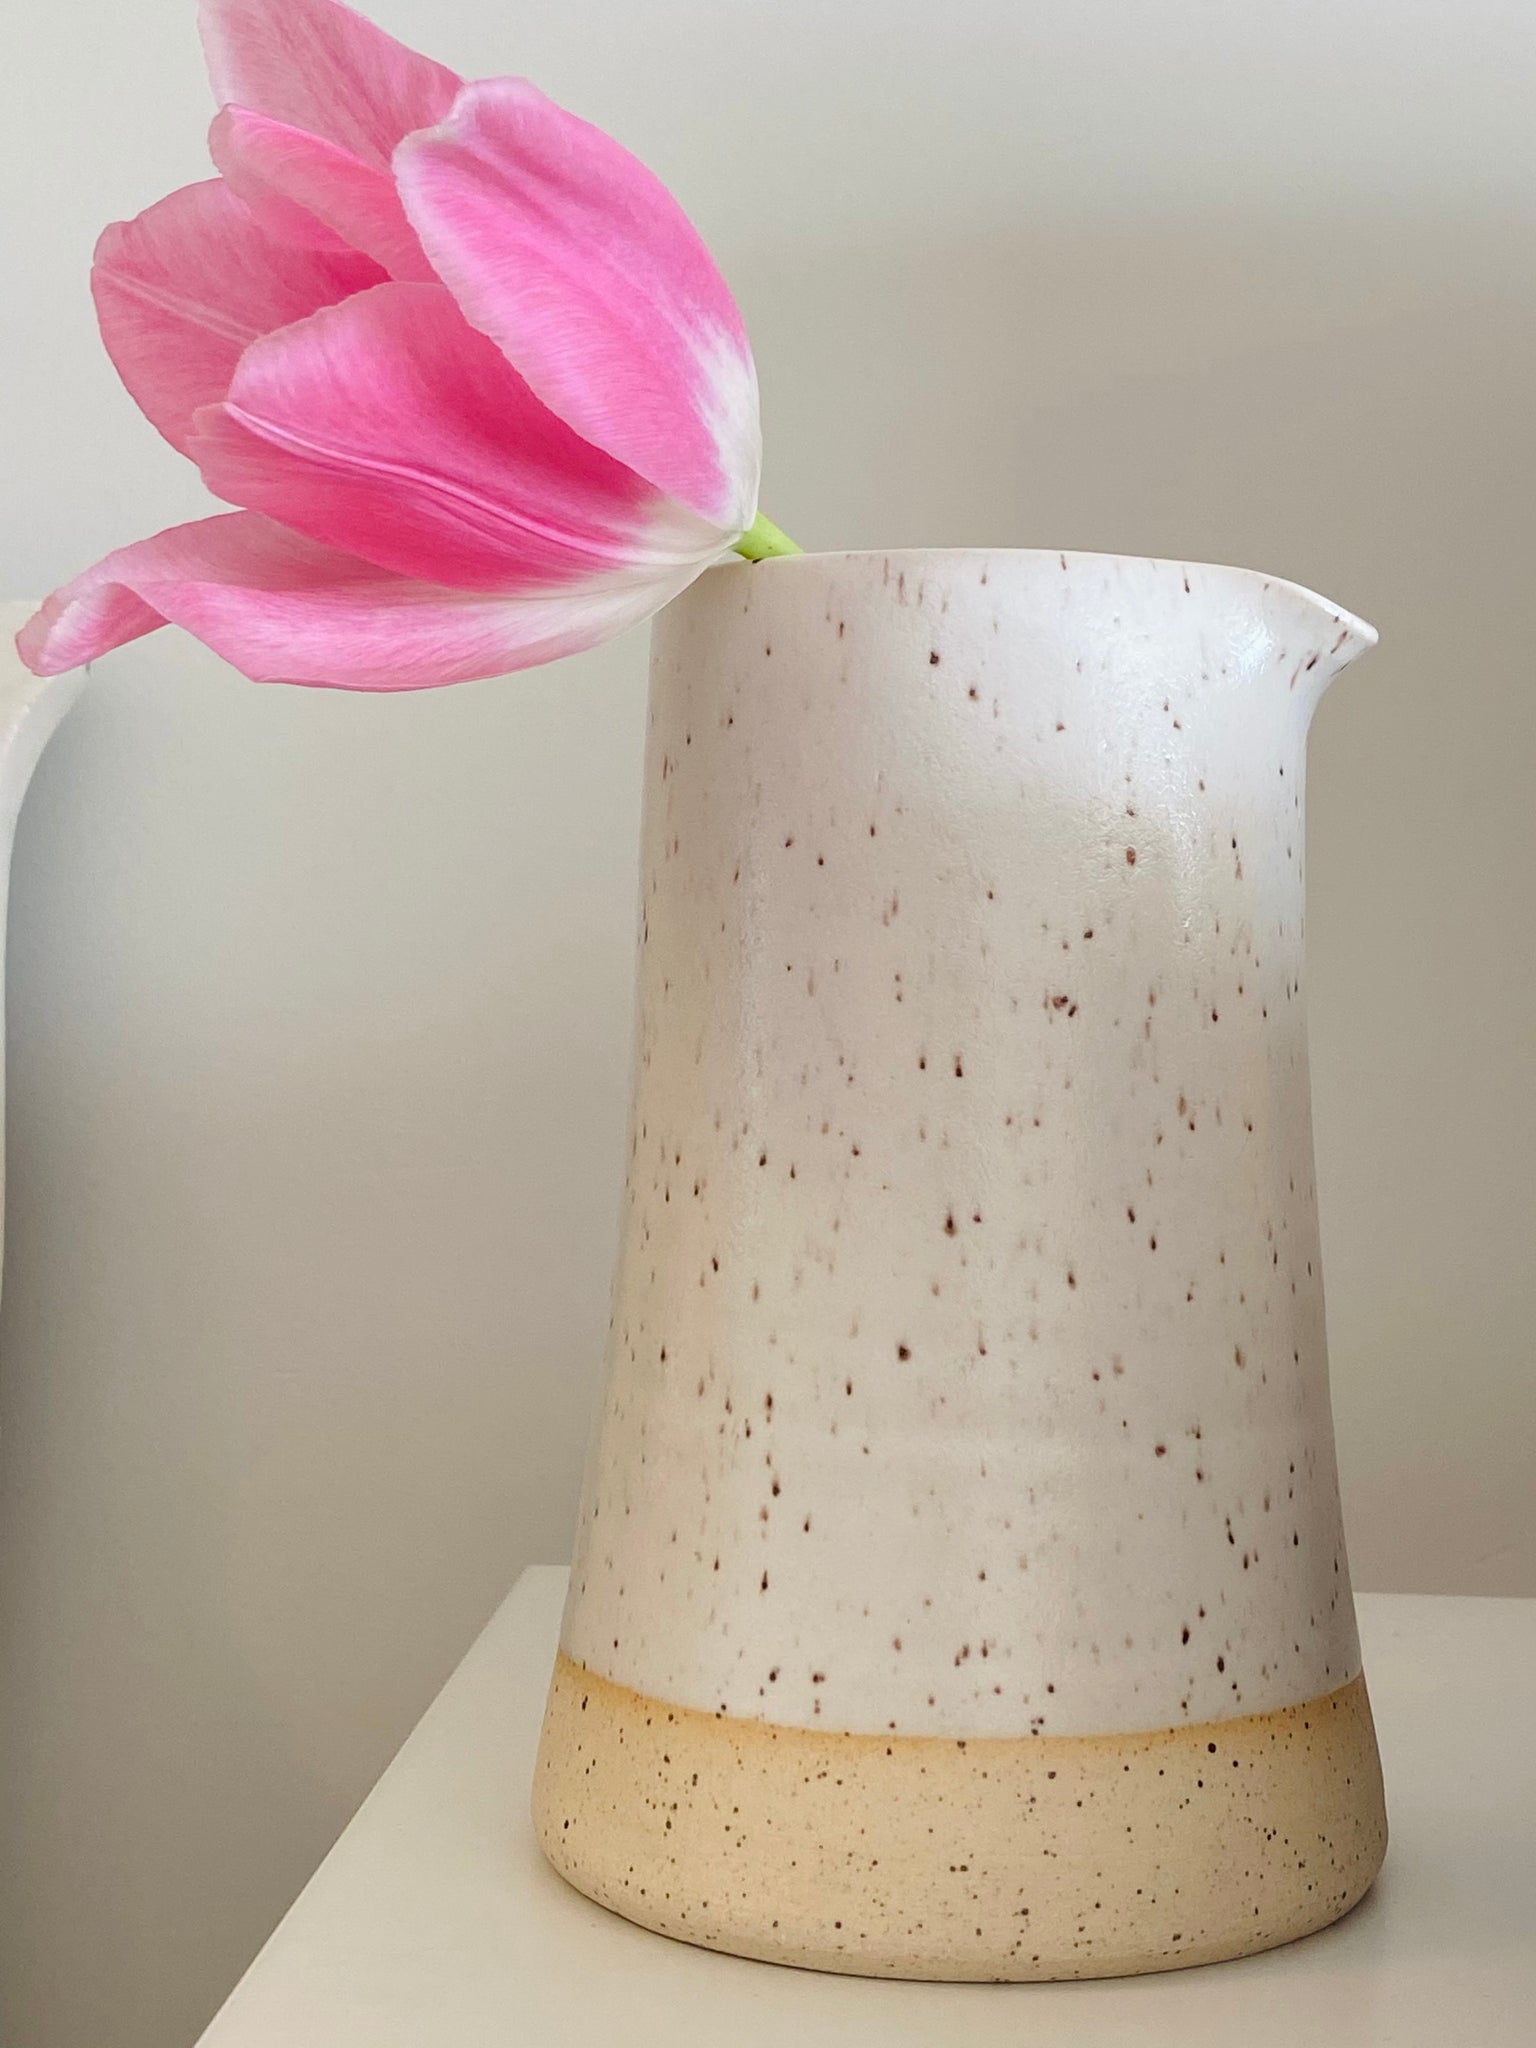 Speckled Ceramic Jug by Danika Vautour